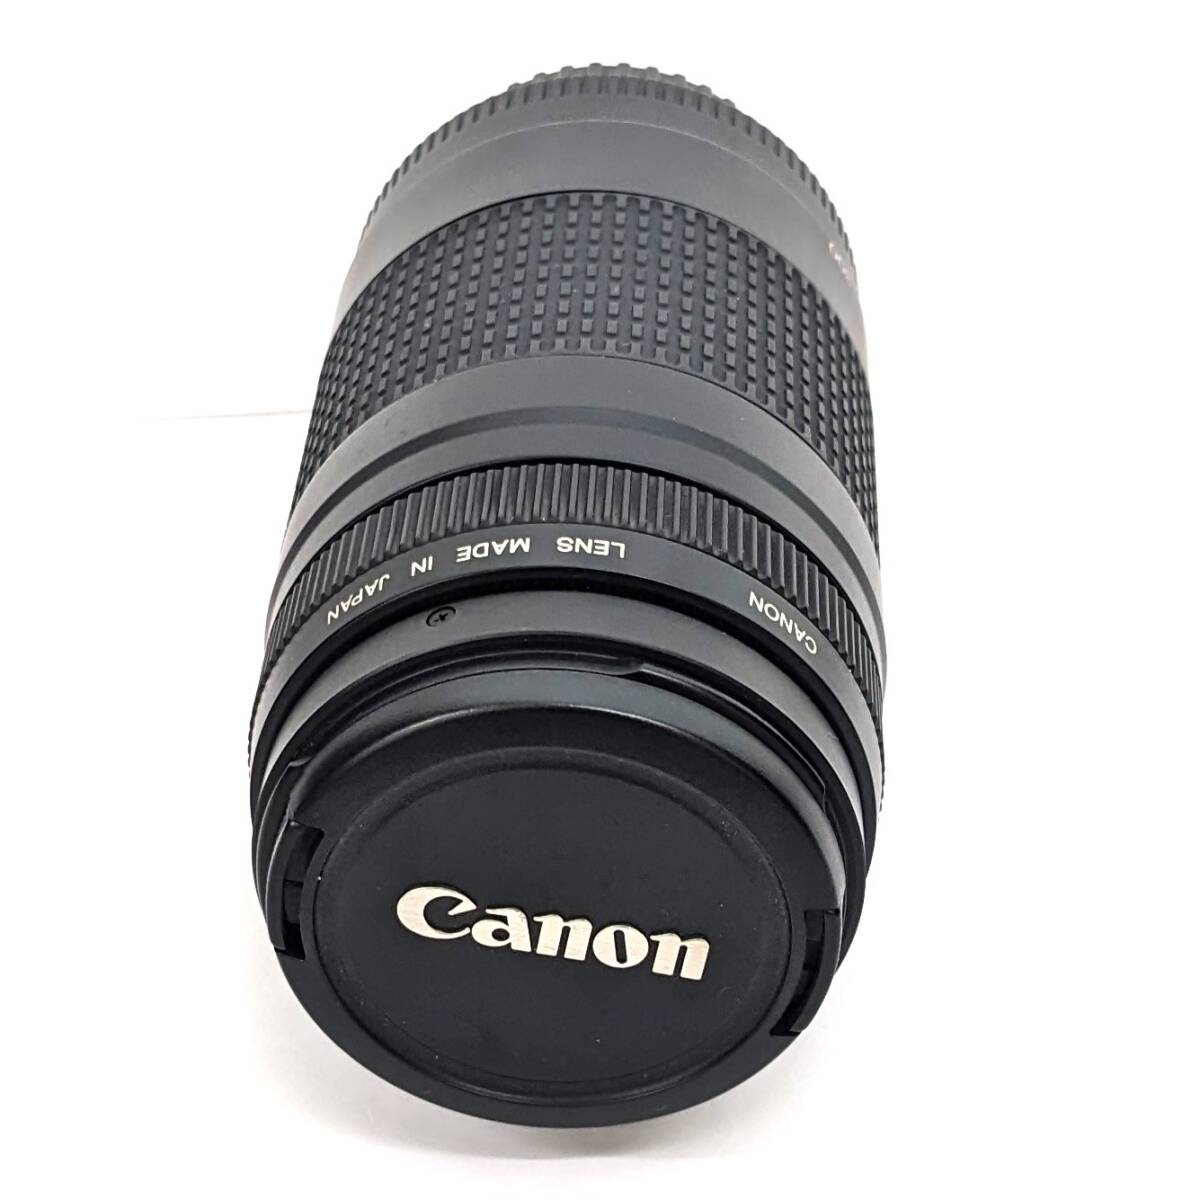 【833】CANON キャノン ZOOM LENS EF ズーム レンズ 75-300mm 1:4-5.6 Ⅱ Φ58mm カメラ用品 一眼 撮影器具 撮影道具 家電 趣味用品の画像5